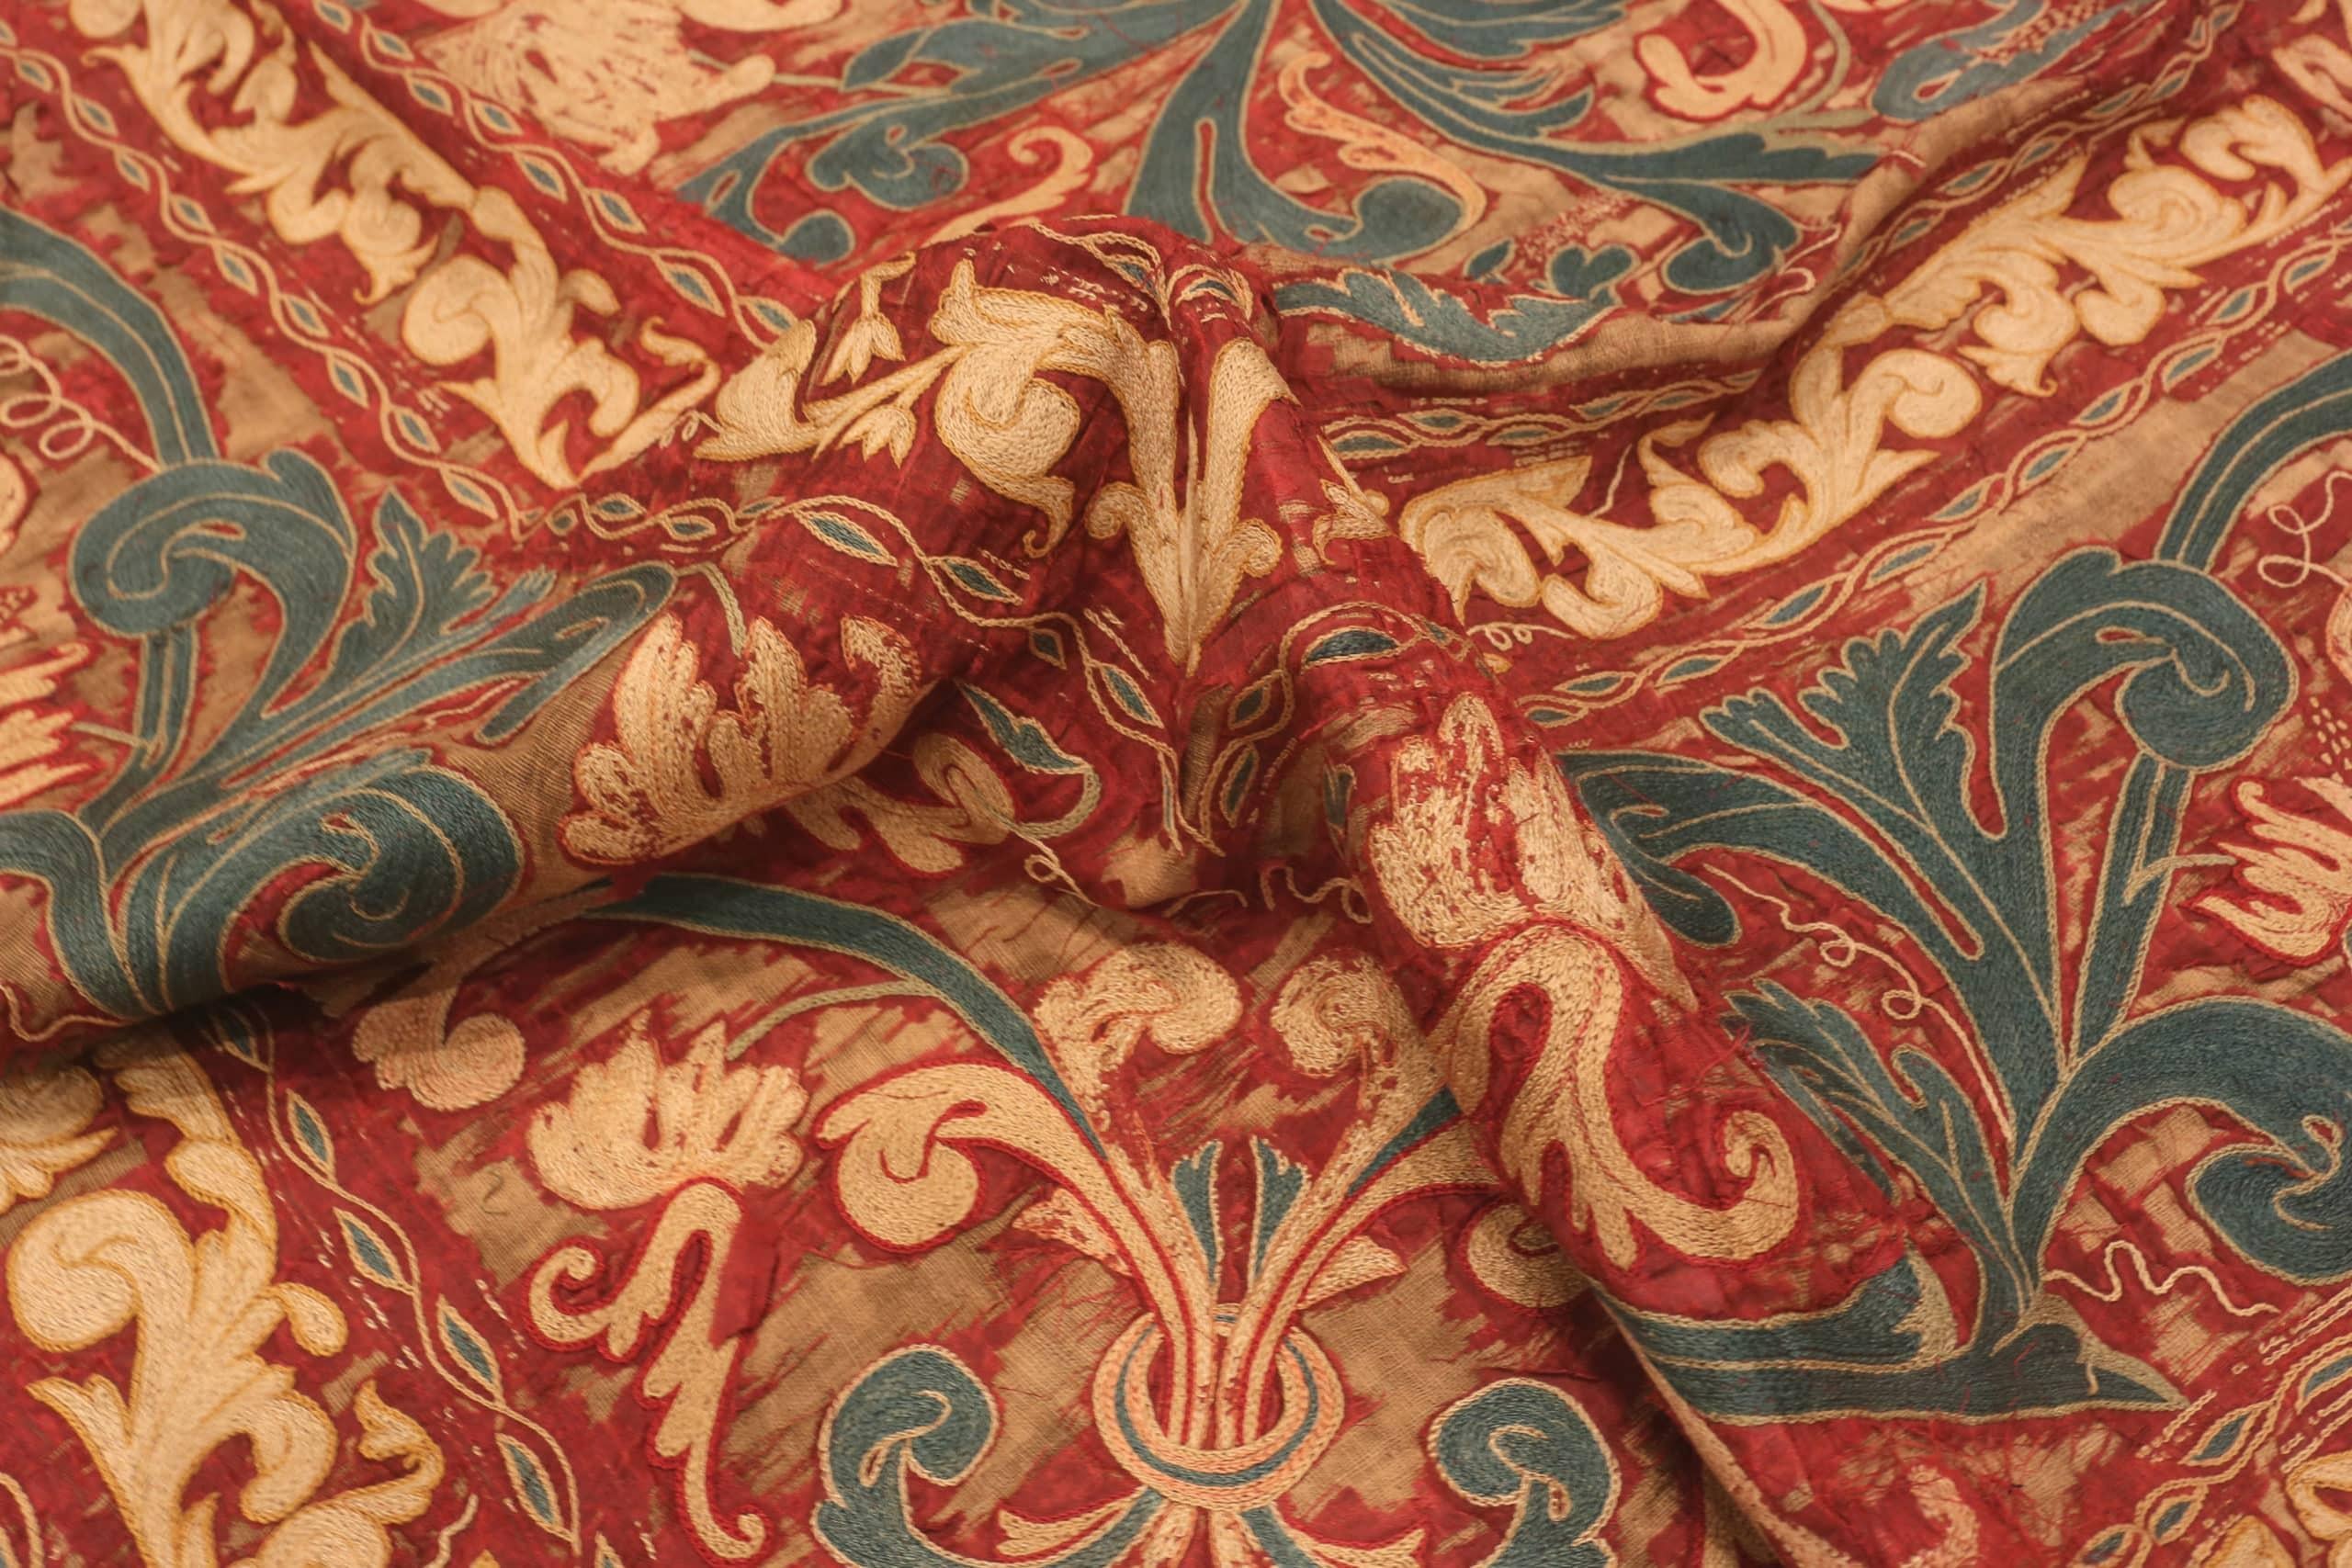 Gorgeous 17th Century Antique Italian Silk Embroidery Textile, Country of Origin: Italy, Circa Date: 17th Century